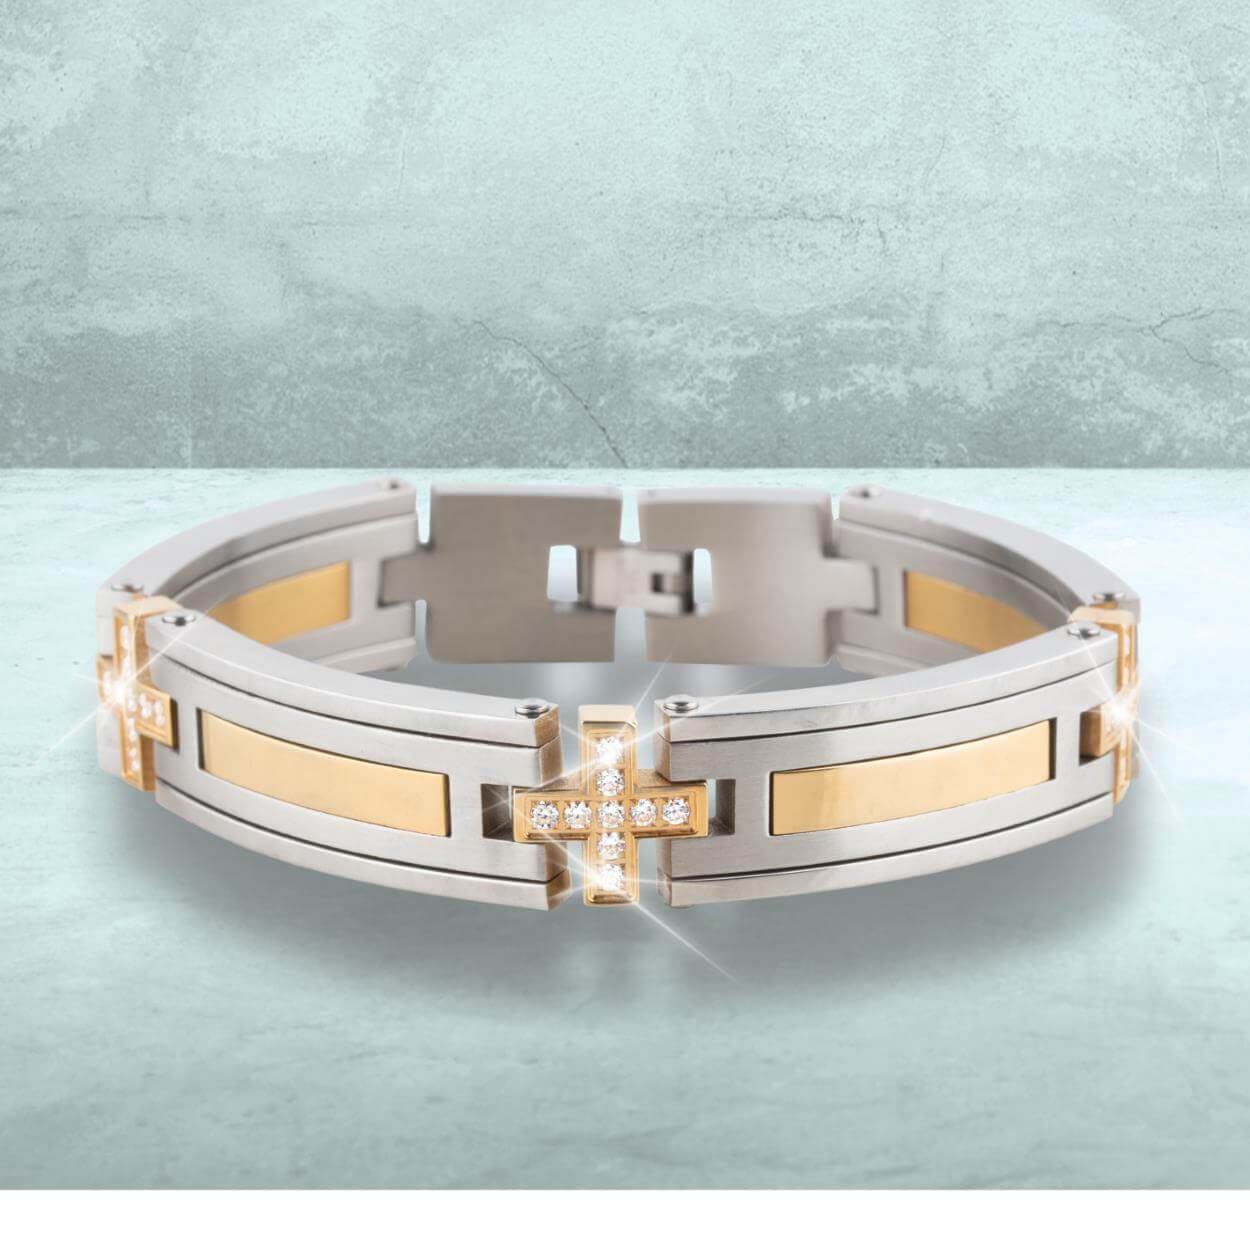 Daniel Steiger Iconic Two-Tone Bracelet